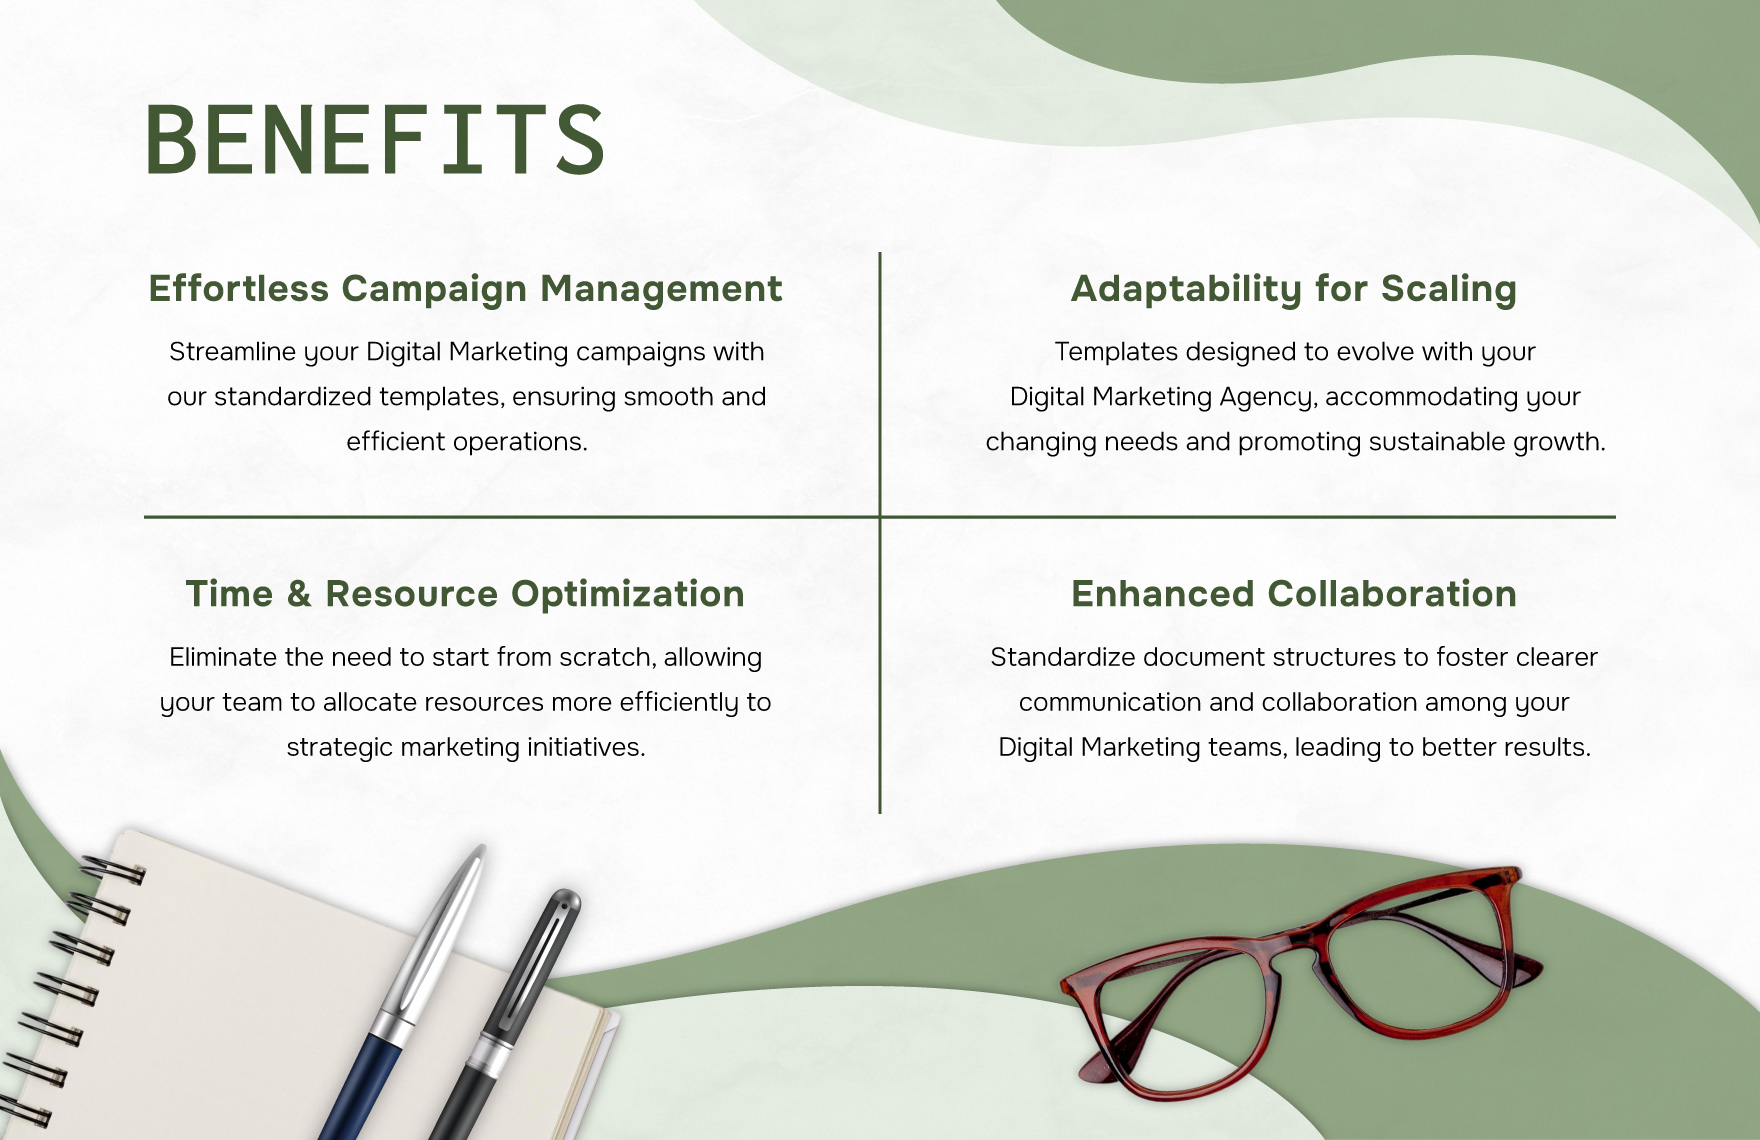 Digital Marketing Agency Content Adaptation Worksheet Template